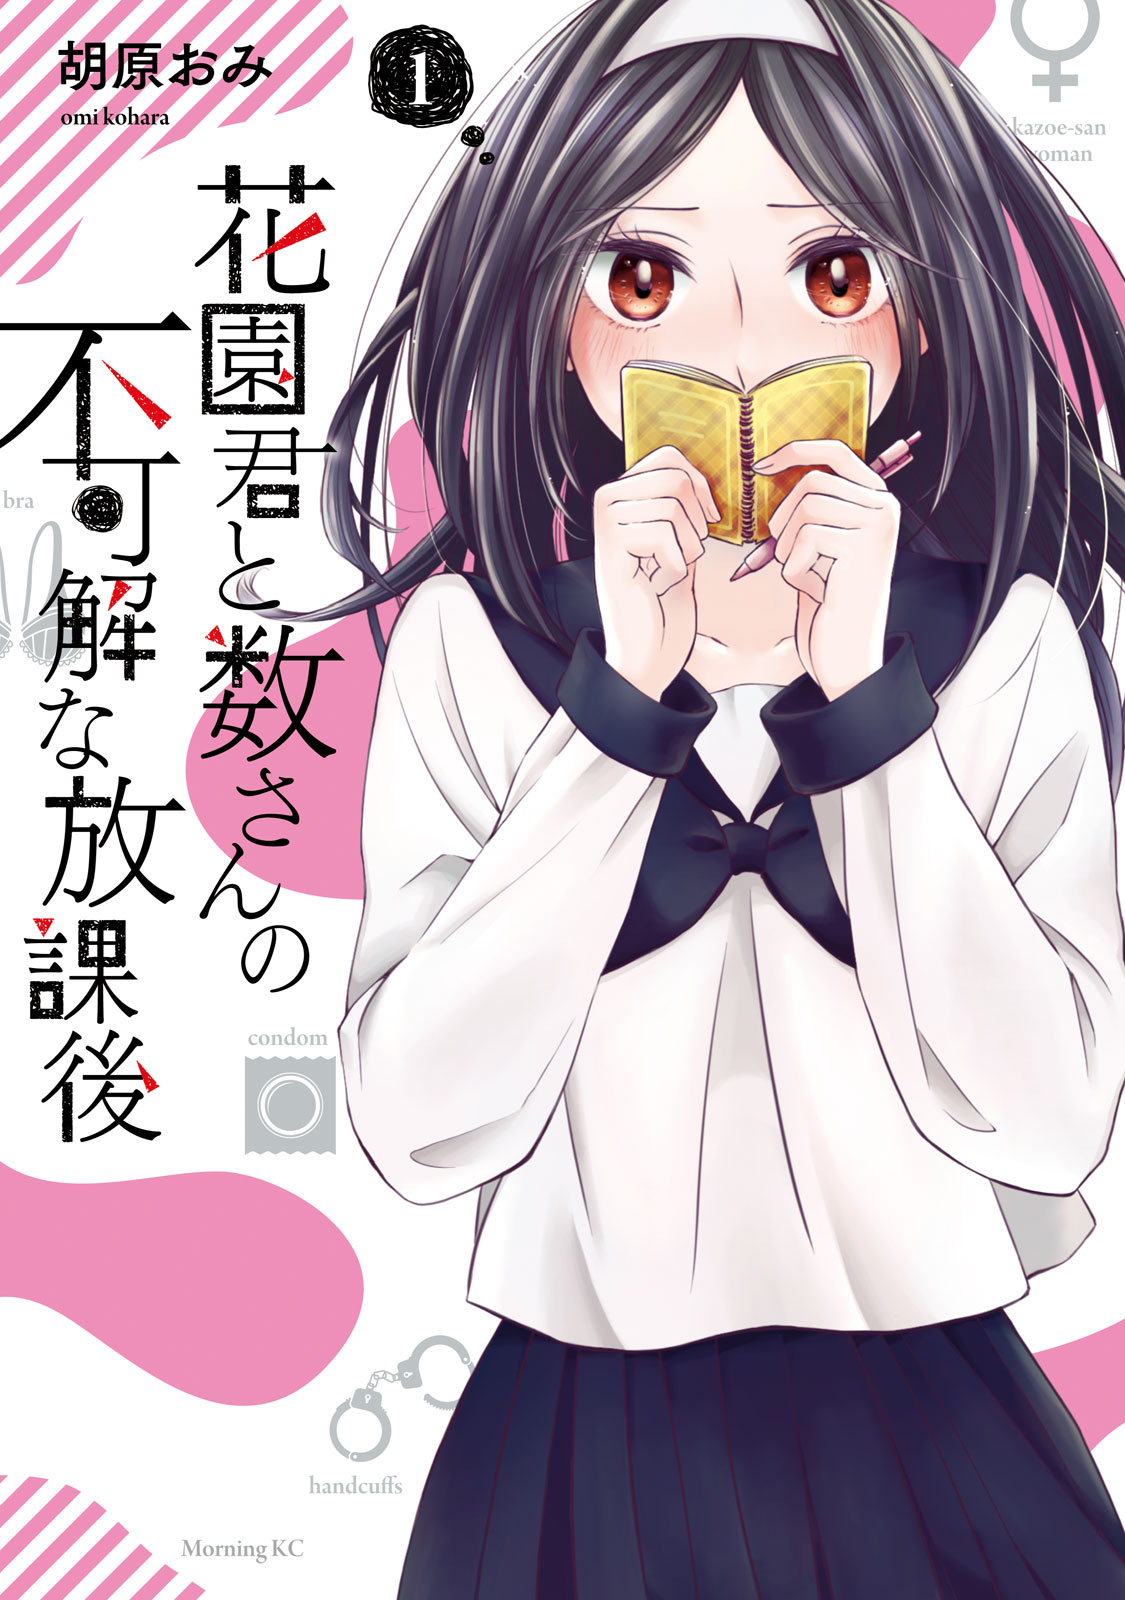 Hanazono and Kazoe's Bizarre After School Rendezvous Manga